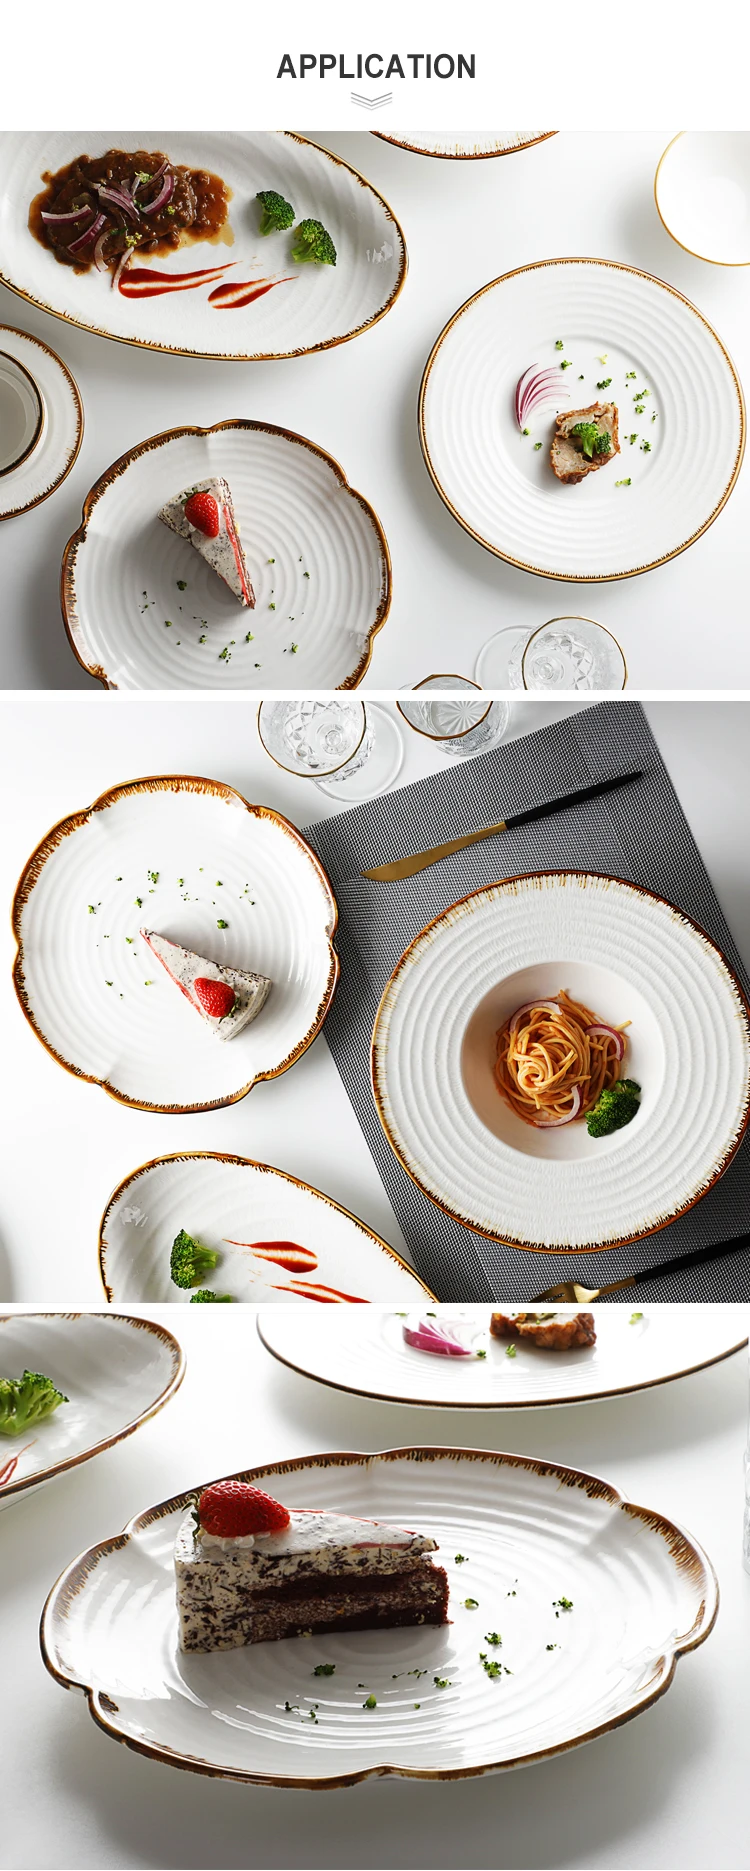 Royal Fine Porcelain Tableware Ceramic Dinner Plates Restaurant Ceramic Plates Dishes*